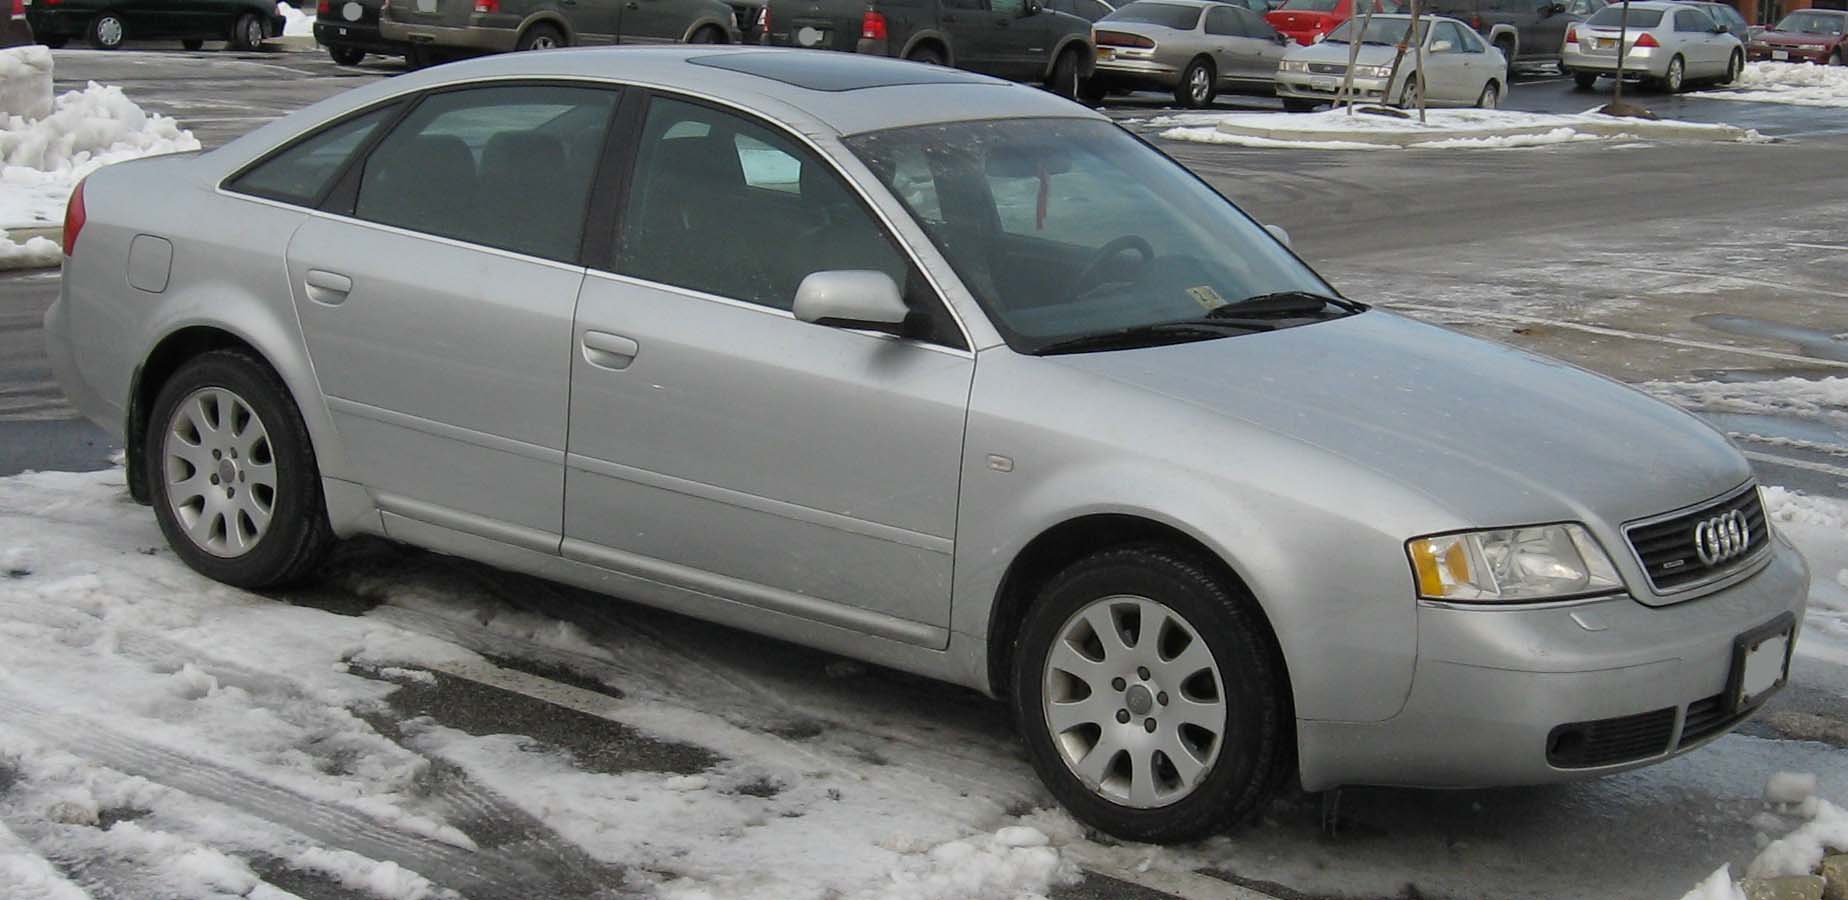 File:2nd-Audi-A6.jpg - Wikimedia Commons